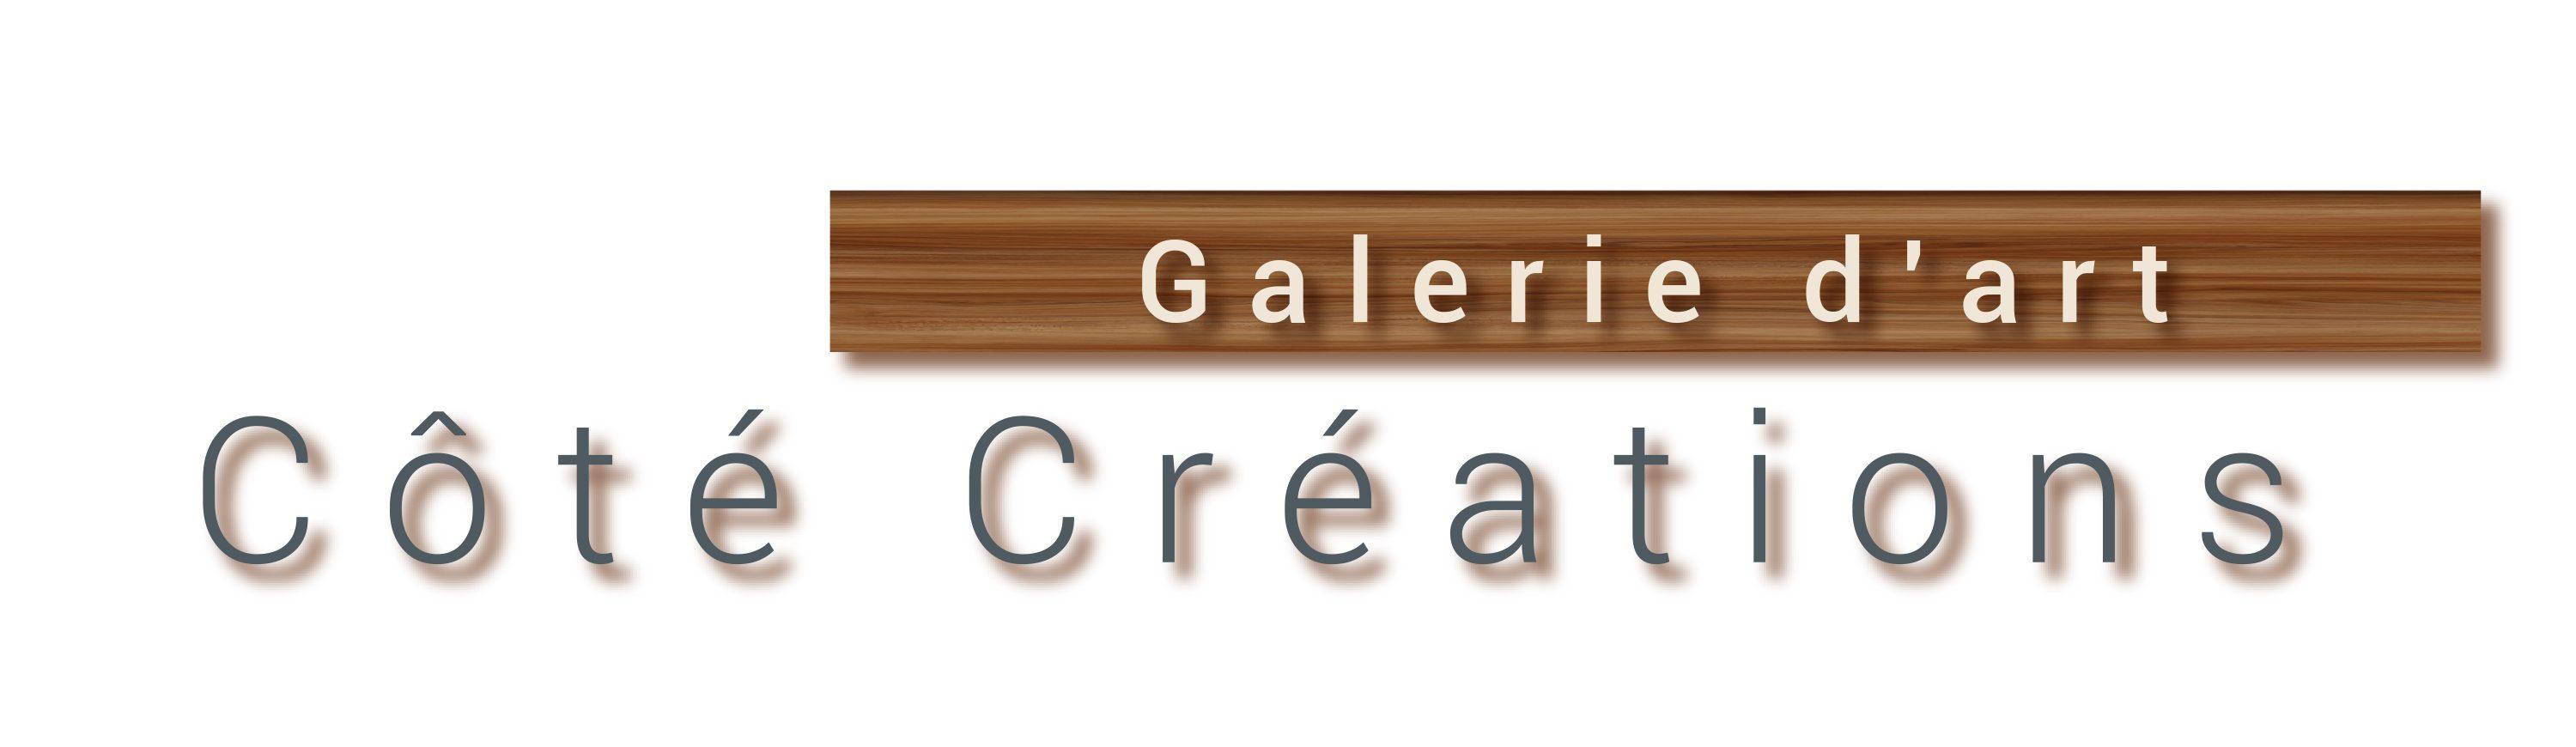 Logo galerie dart cote creations